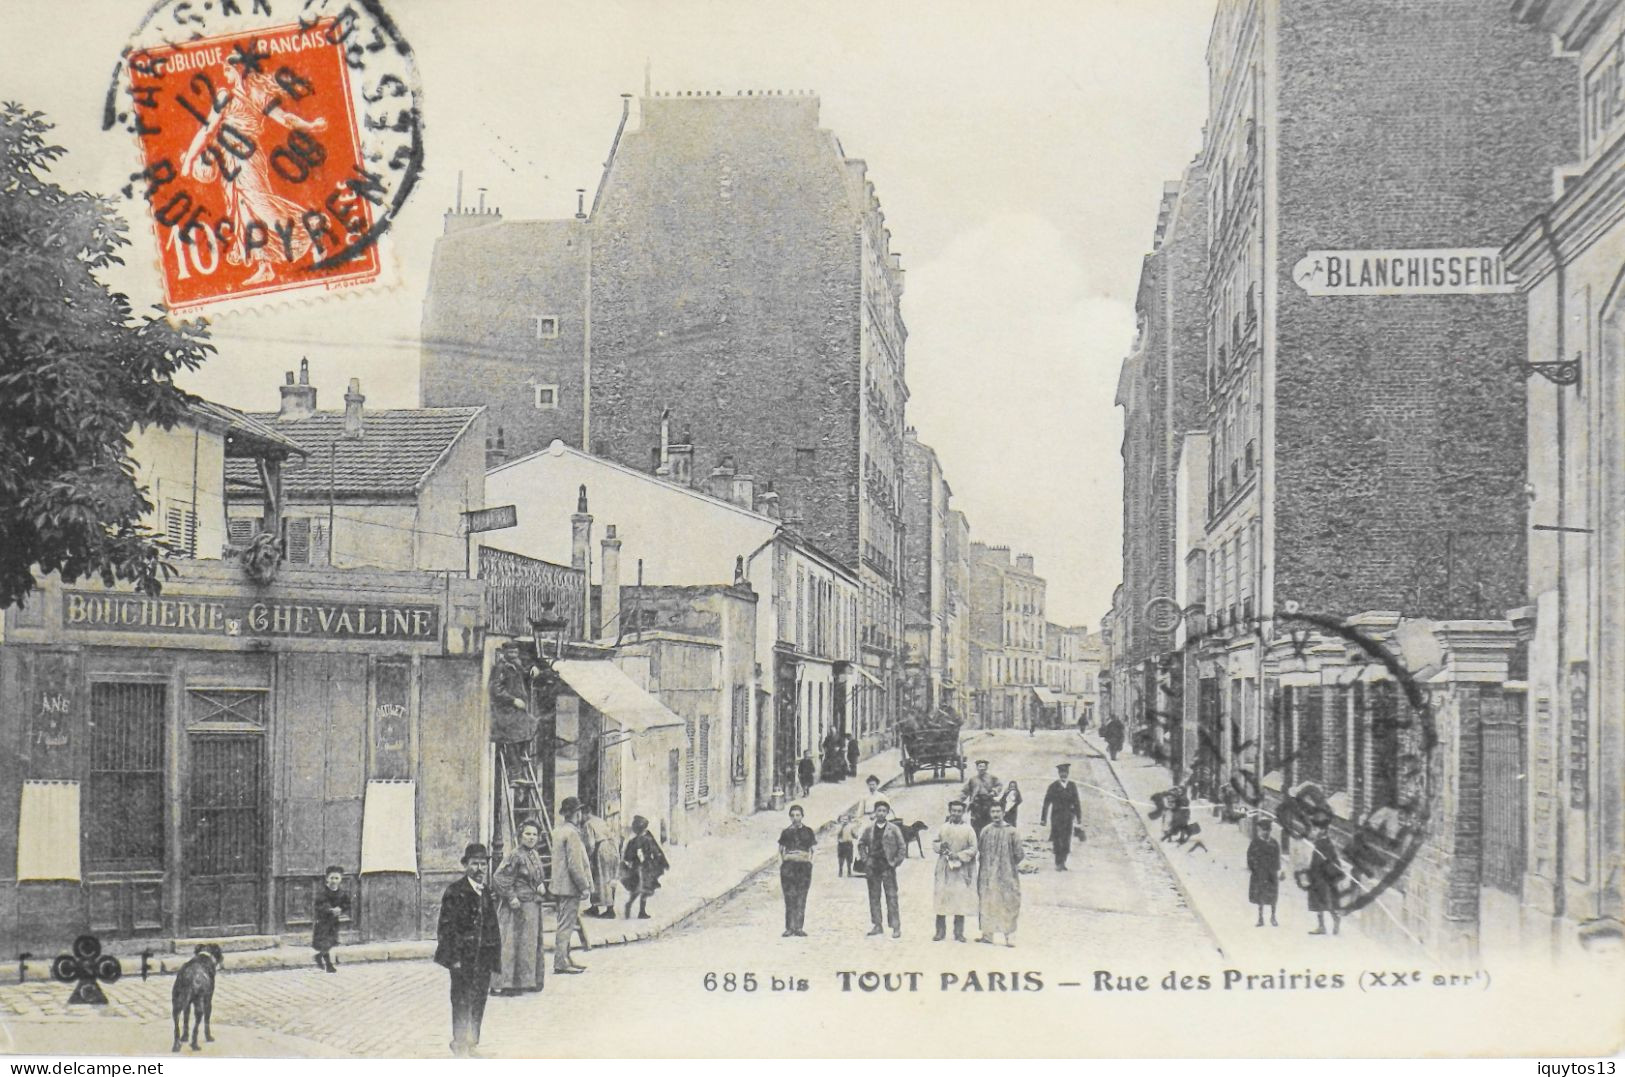 CPA. [75] > TOUT PARIS > N° 685 Bis - RUE DES PRAIRIES - ALLUMEUR DE REVERBERE - (XXe Arrt.) - 1909 - TBE - District 20